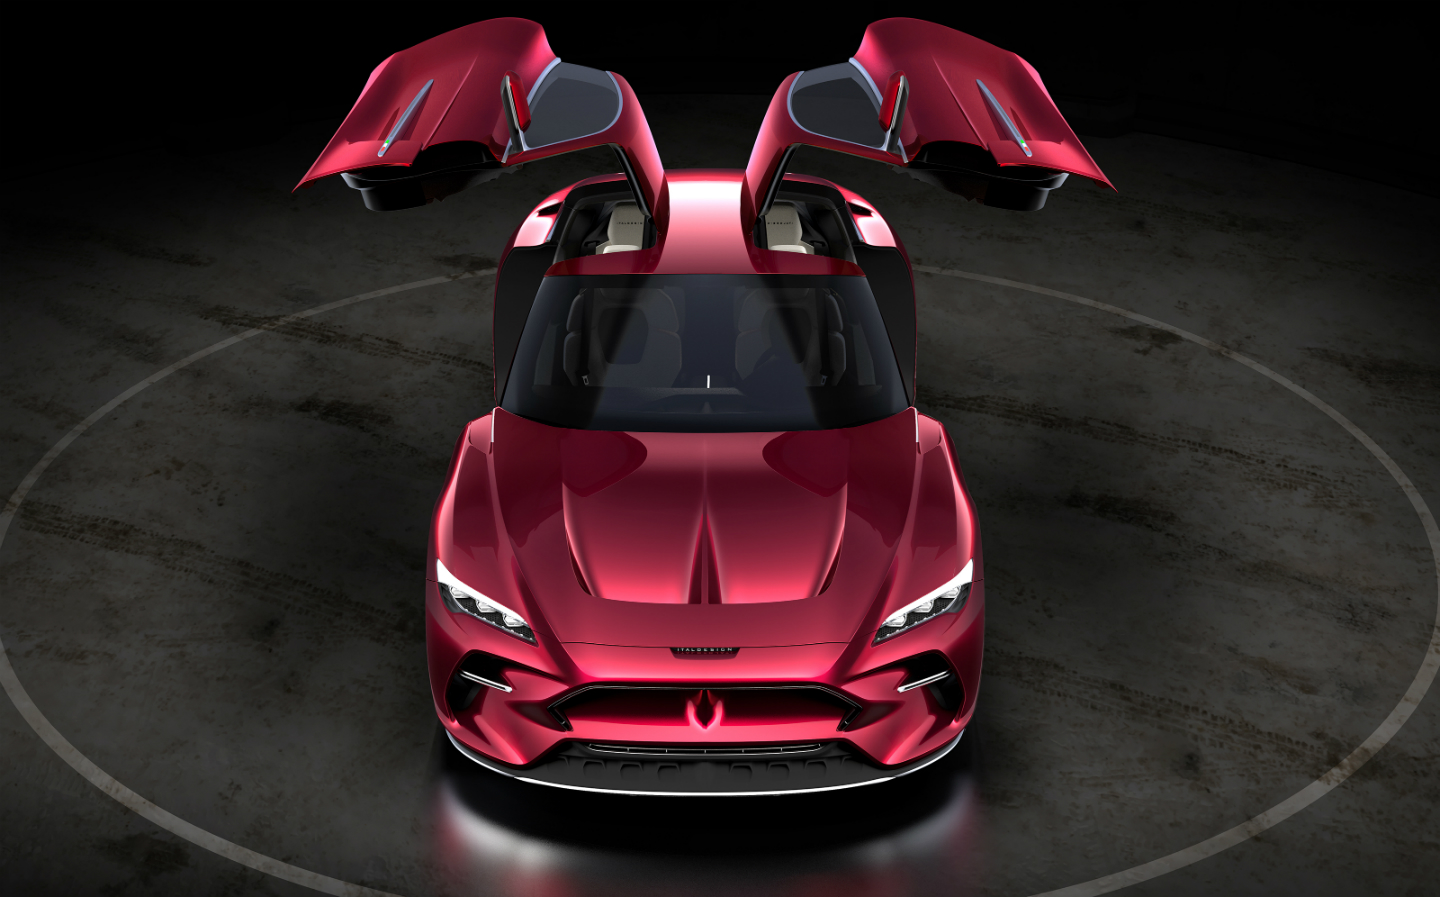 ItalDesign DaVinci Concept car